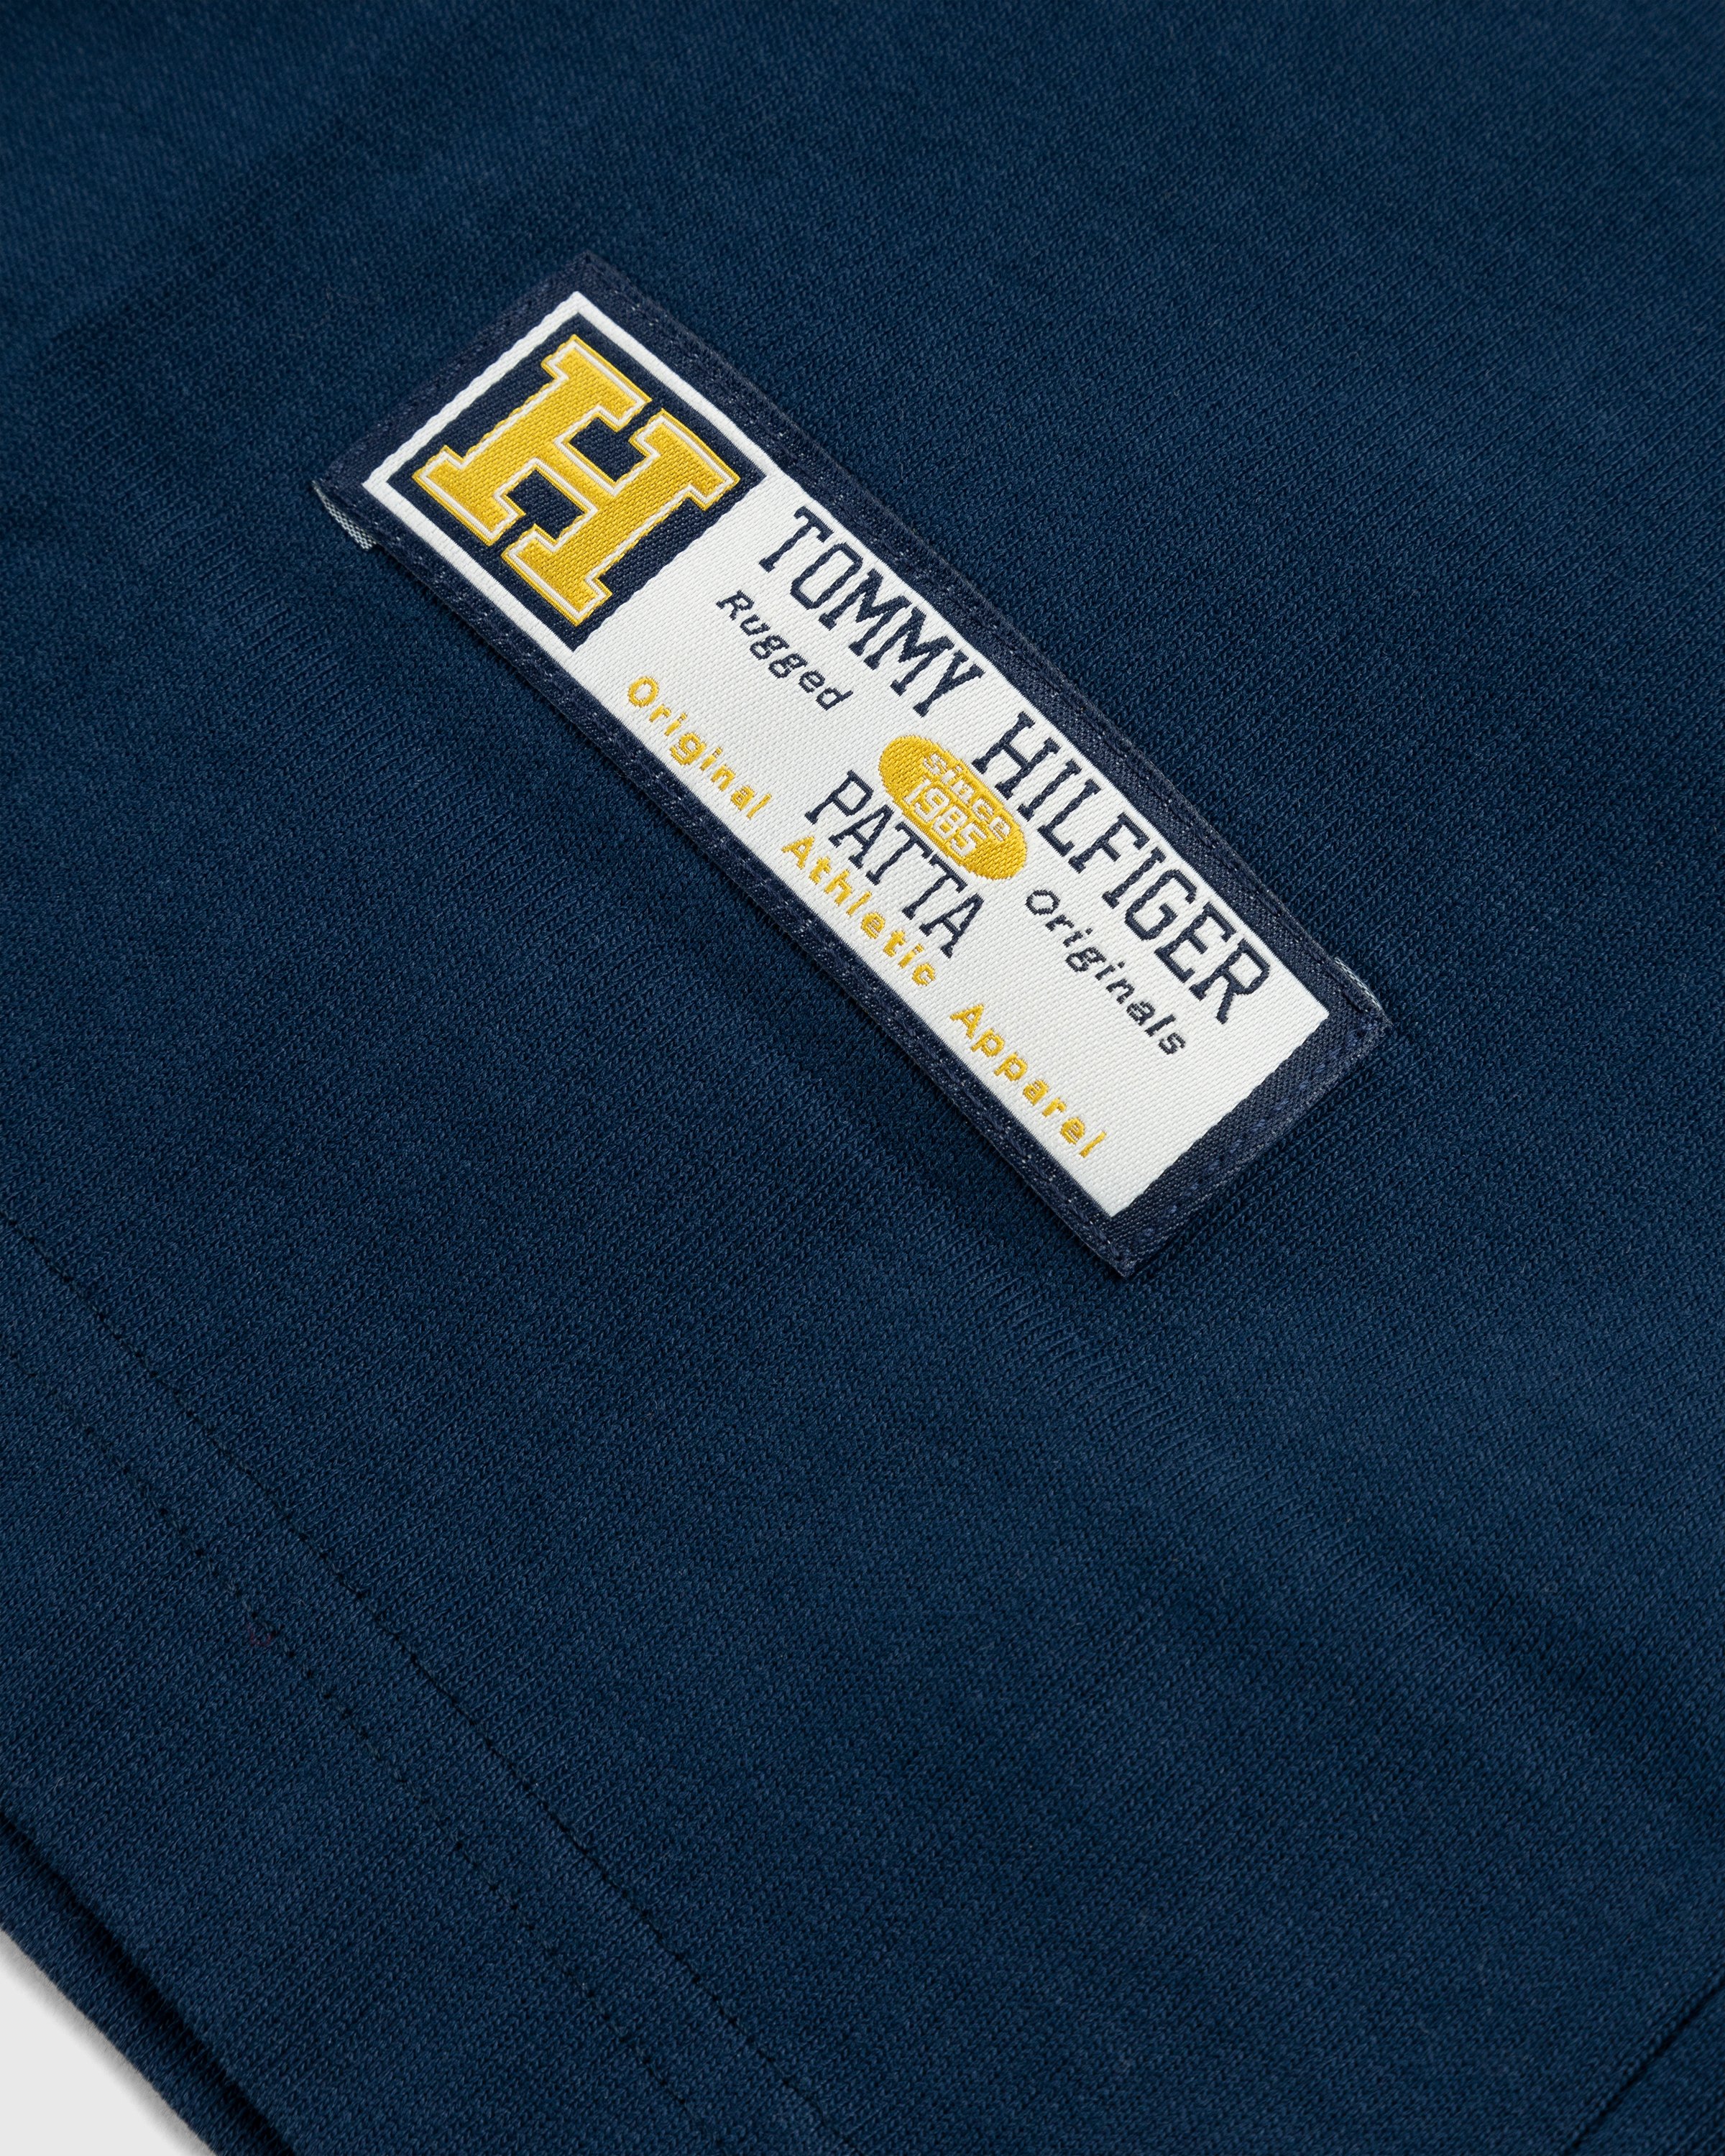 Patta x Tommy Hilfiger - T-Shirt Sport Navy - Clothing - Blue - Image 5